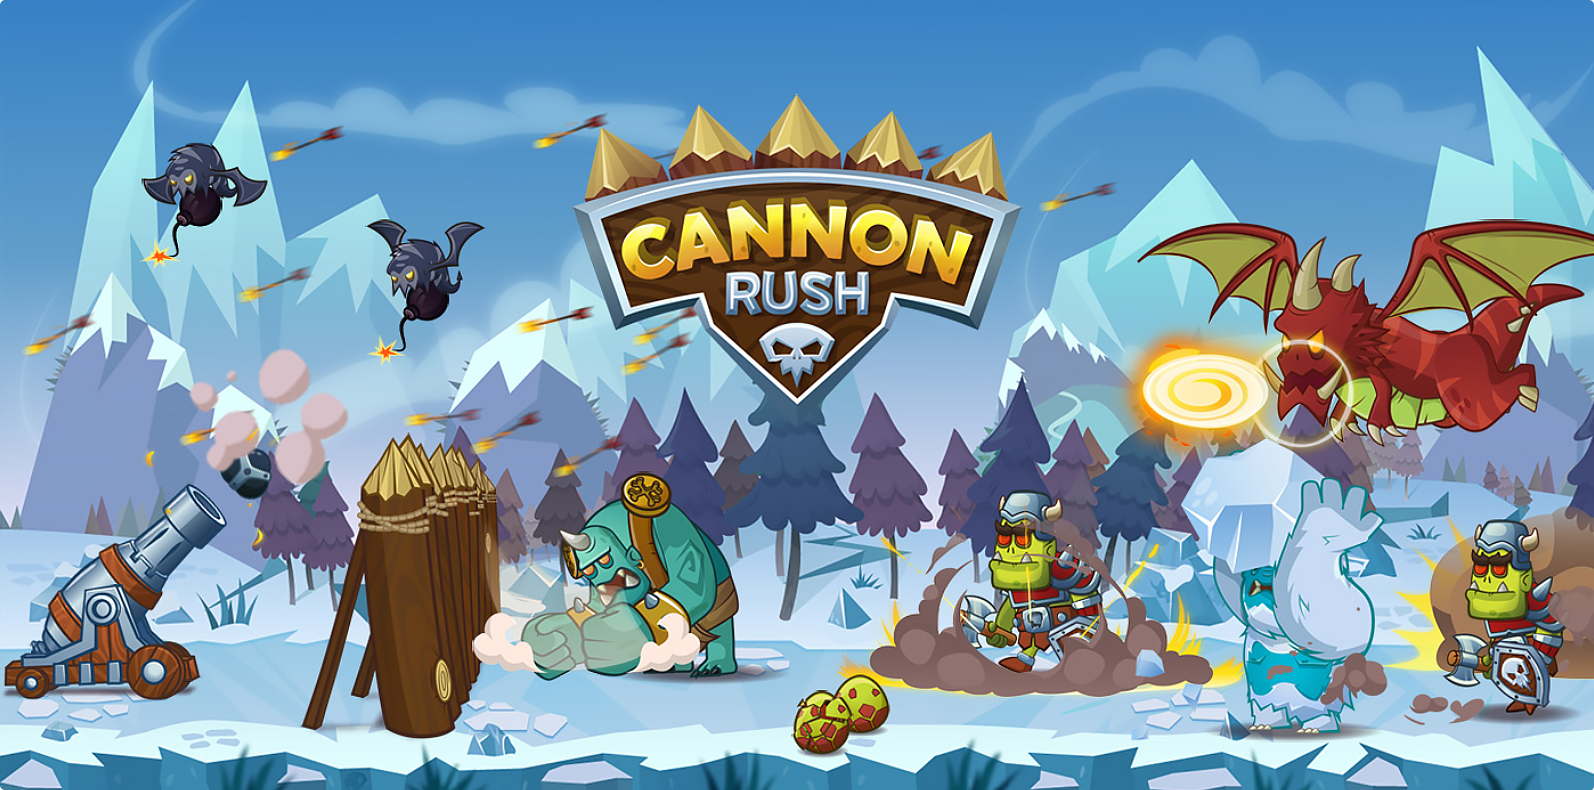 Cannon Rush 2D tower defense game development